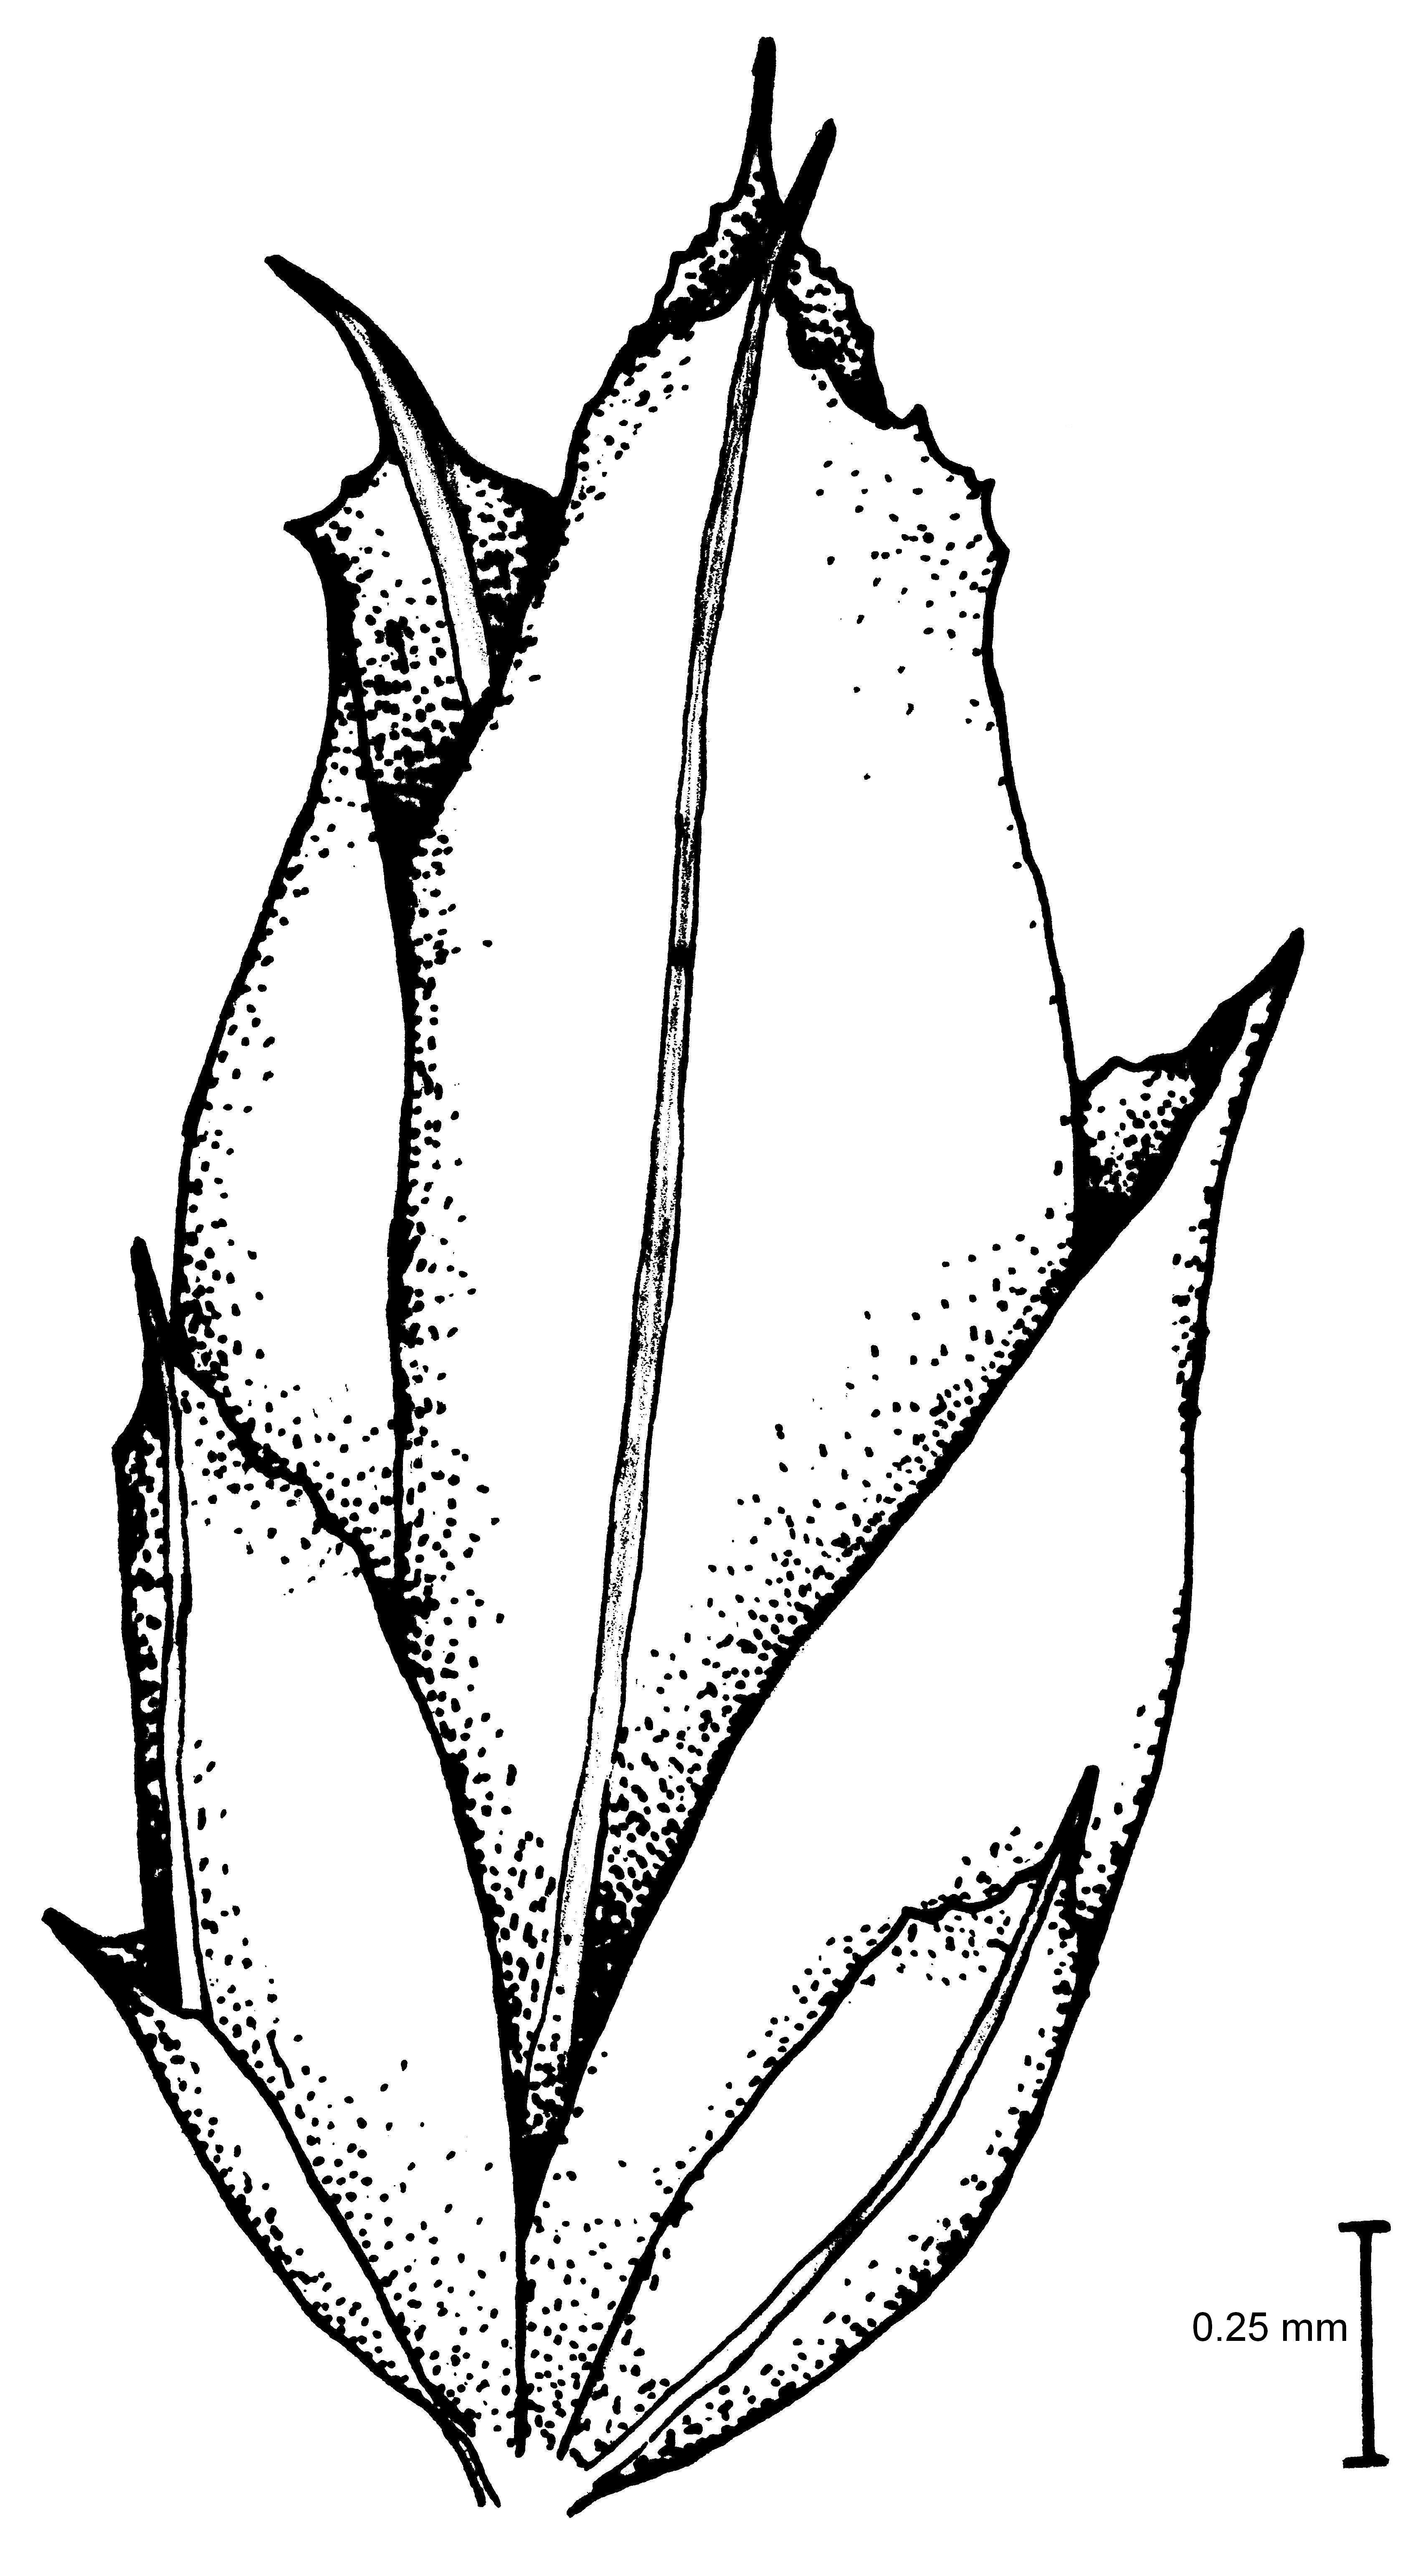 Image of acaulon moss